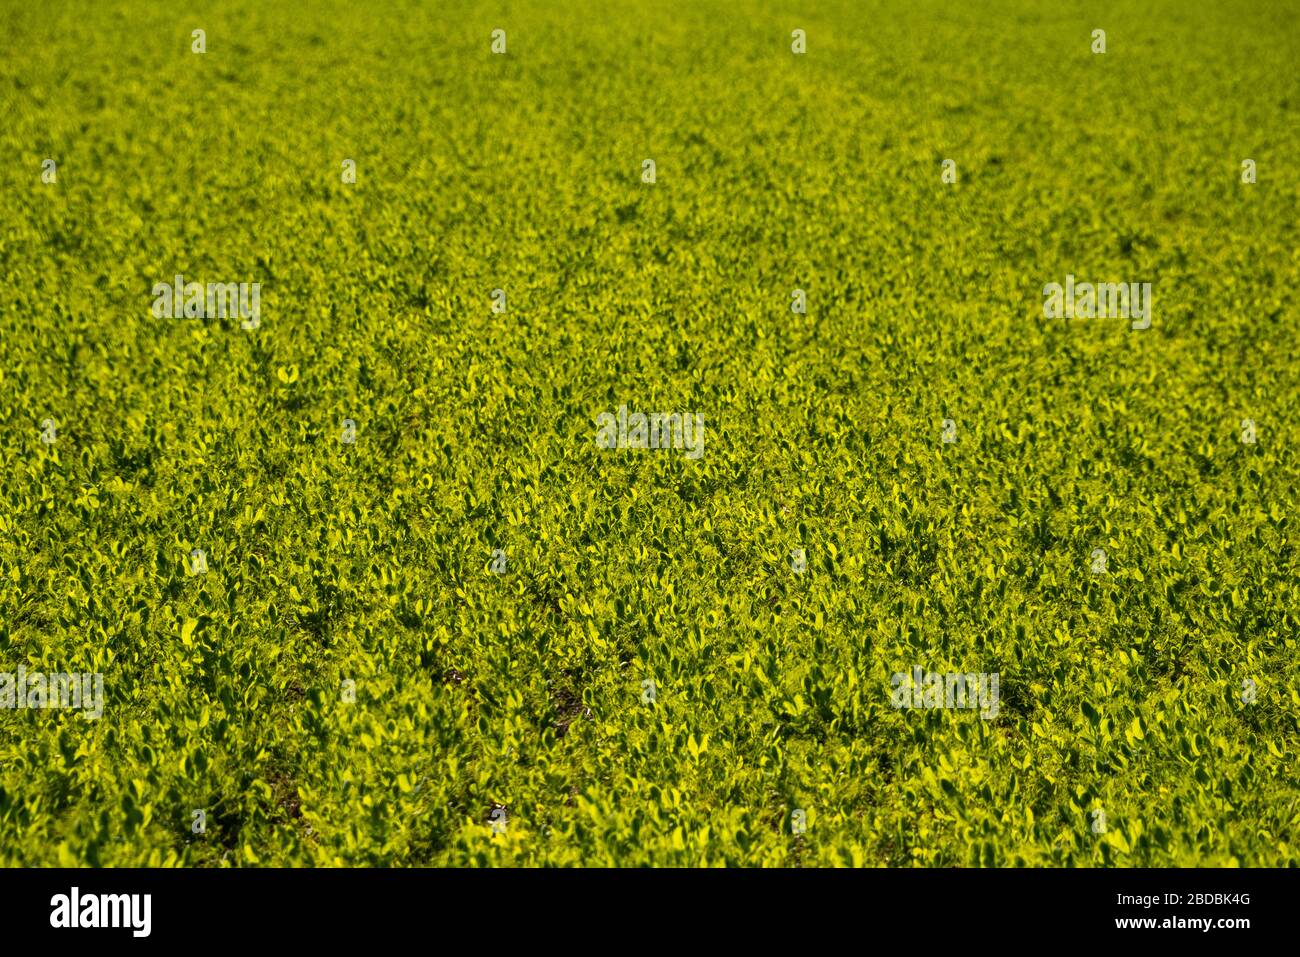 Februar 2020 - Belianes-Preixana, Spanien. Ein grünes Feld in den Plainas von Belianes-Preixana. Stockfoto